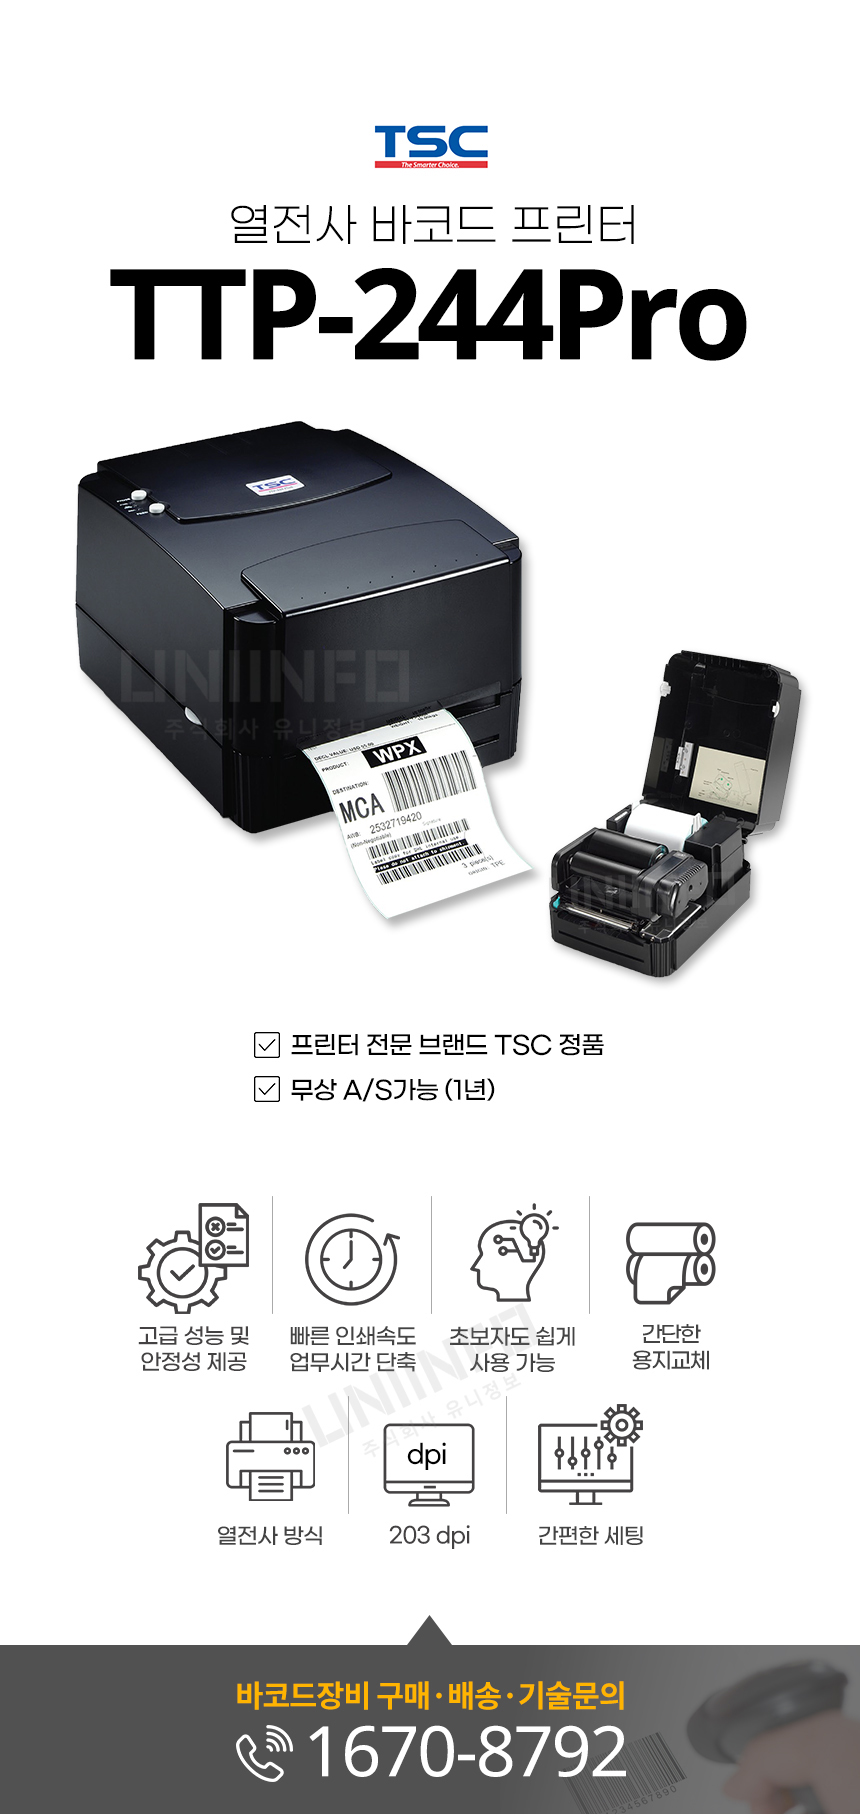 ttp-244pro 열전사 바코드 프린터 빠른 인쇄 속도 업무시간 단축 간단한 용지교체 203dpi 간편한 세팅